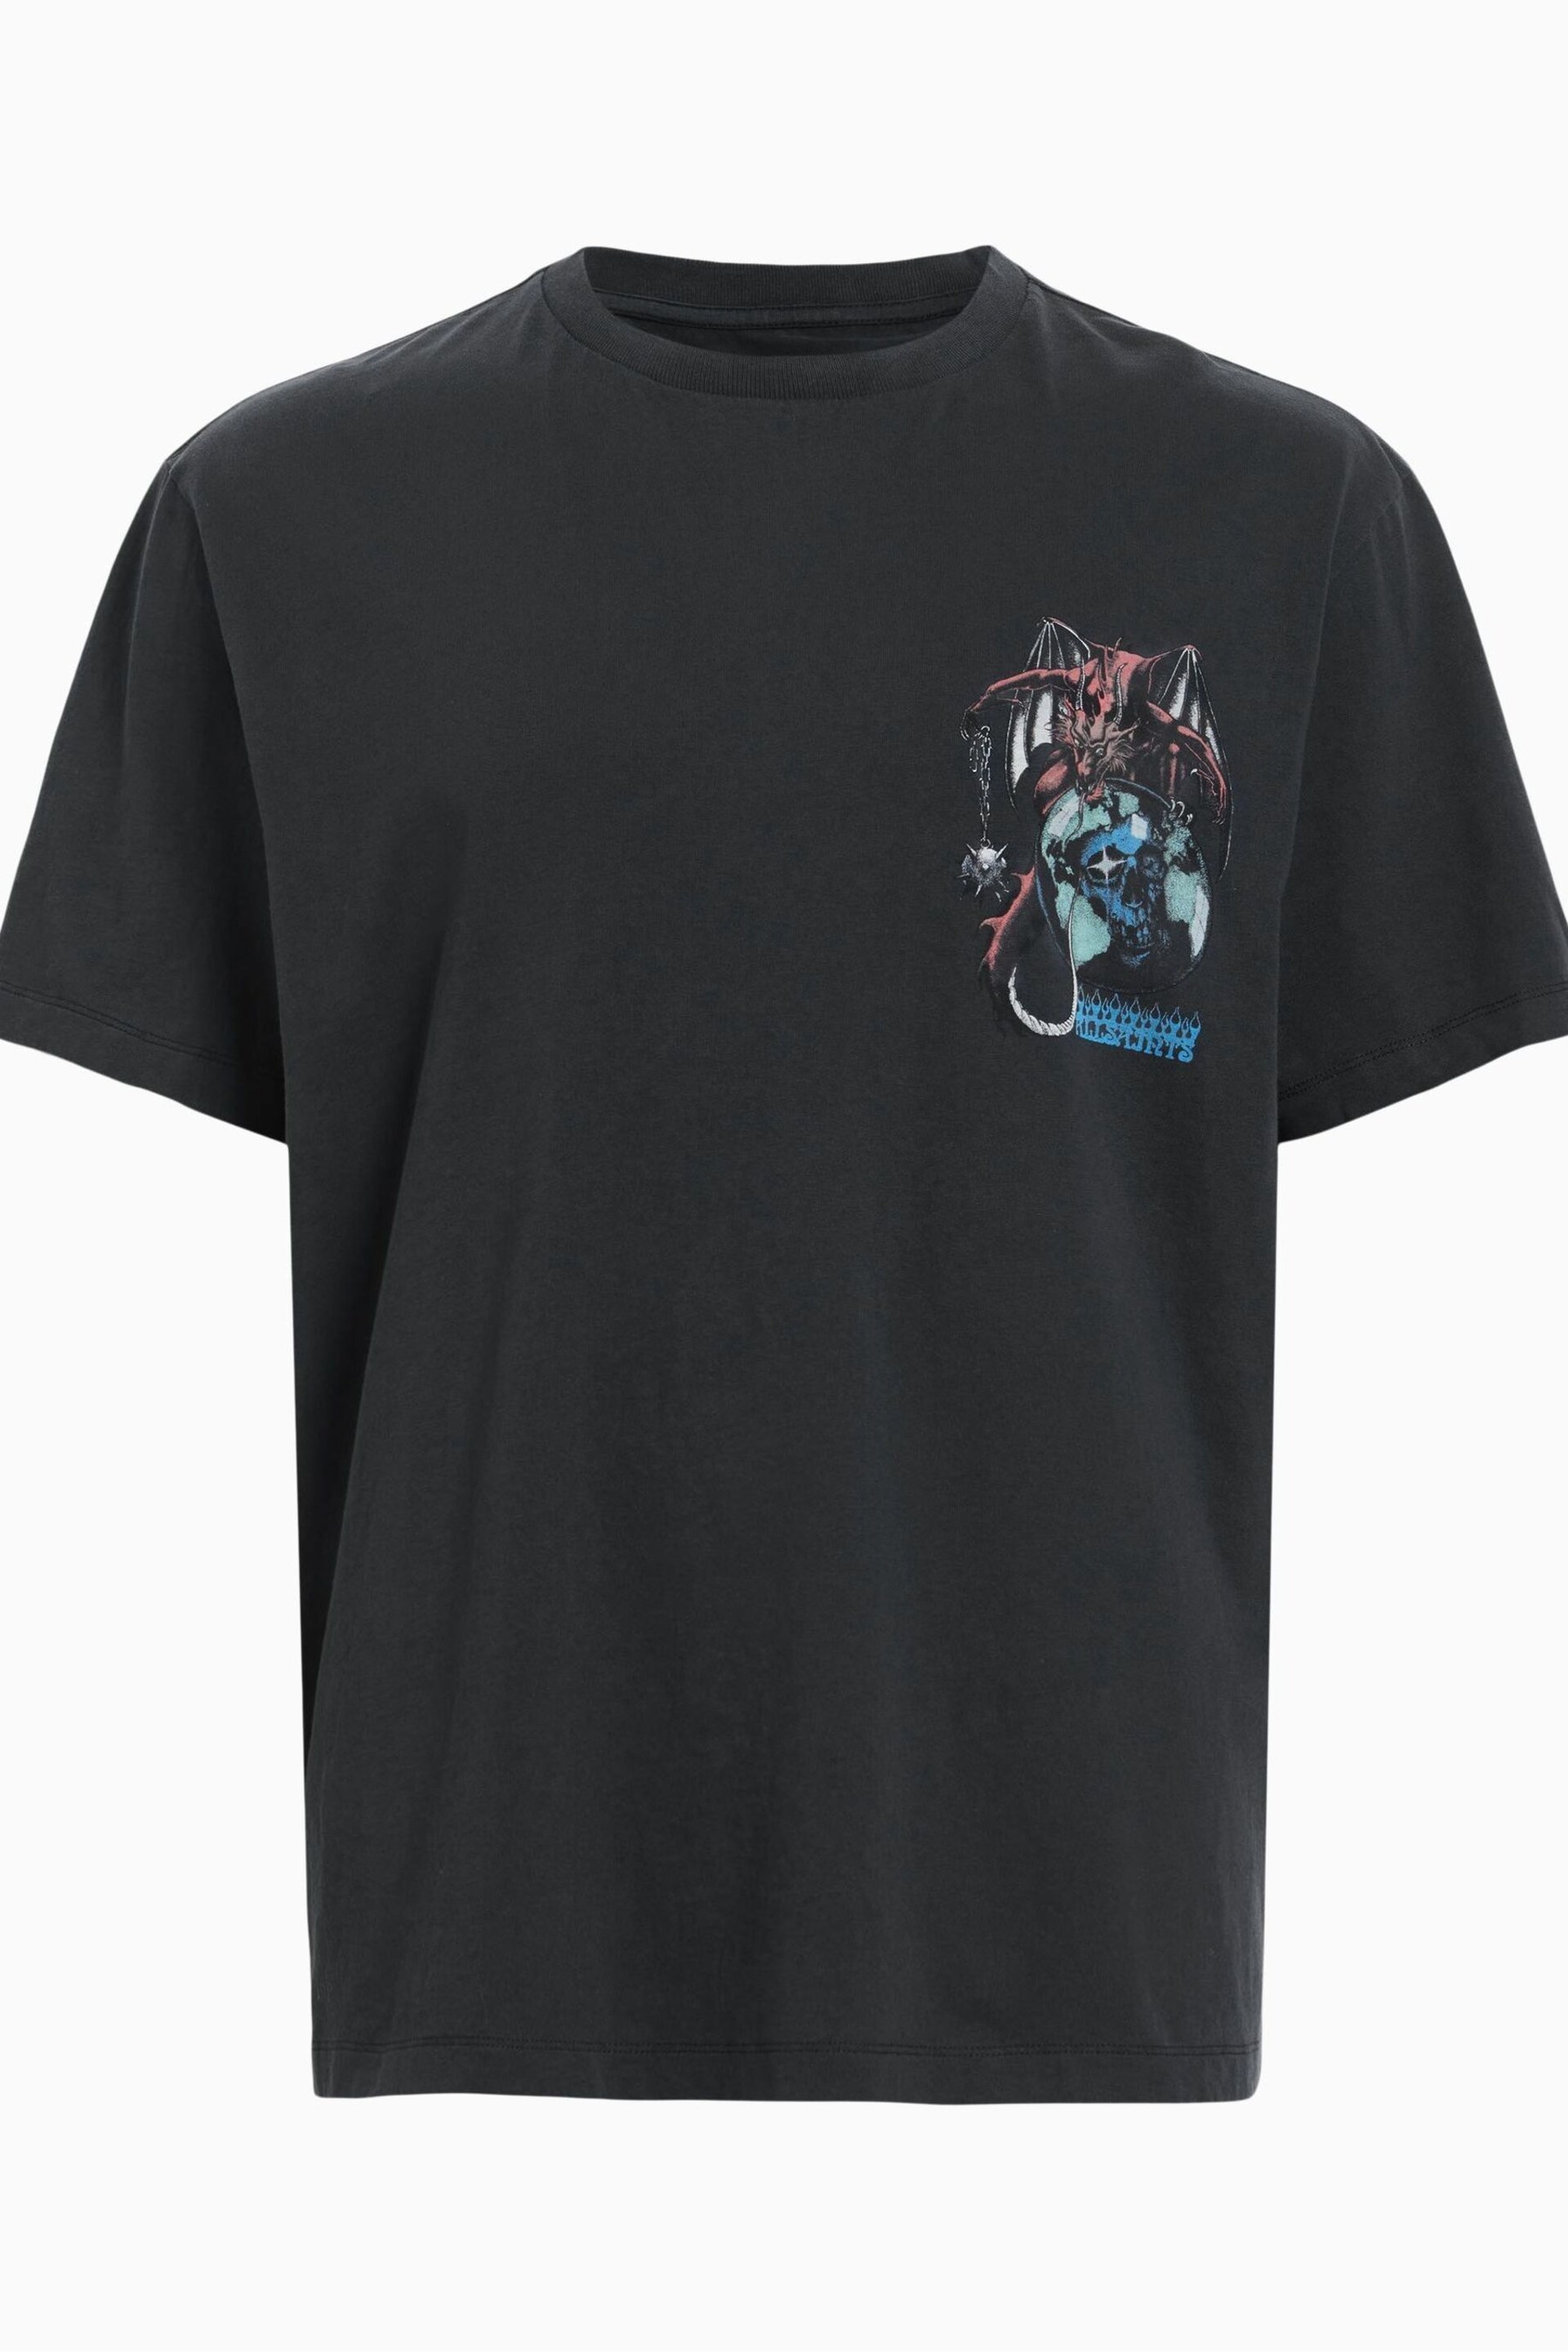 AllSaints Black Space Dragon Crew T-Shirt - Image 6 of 6